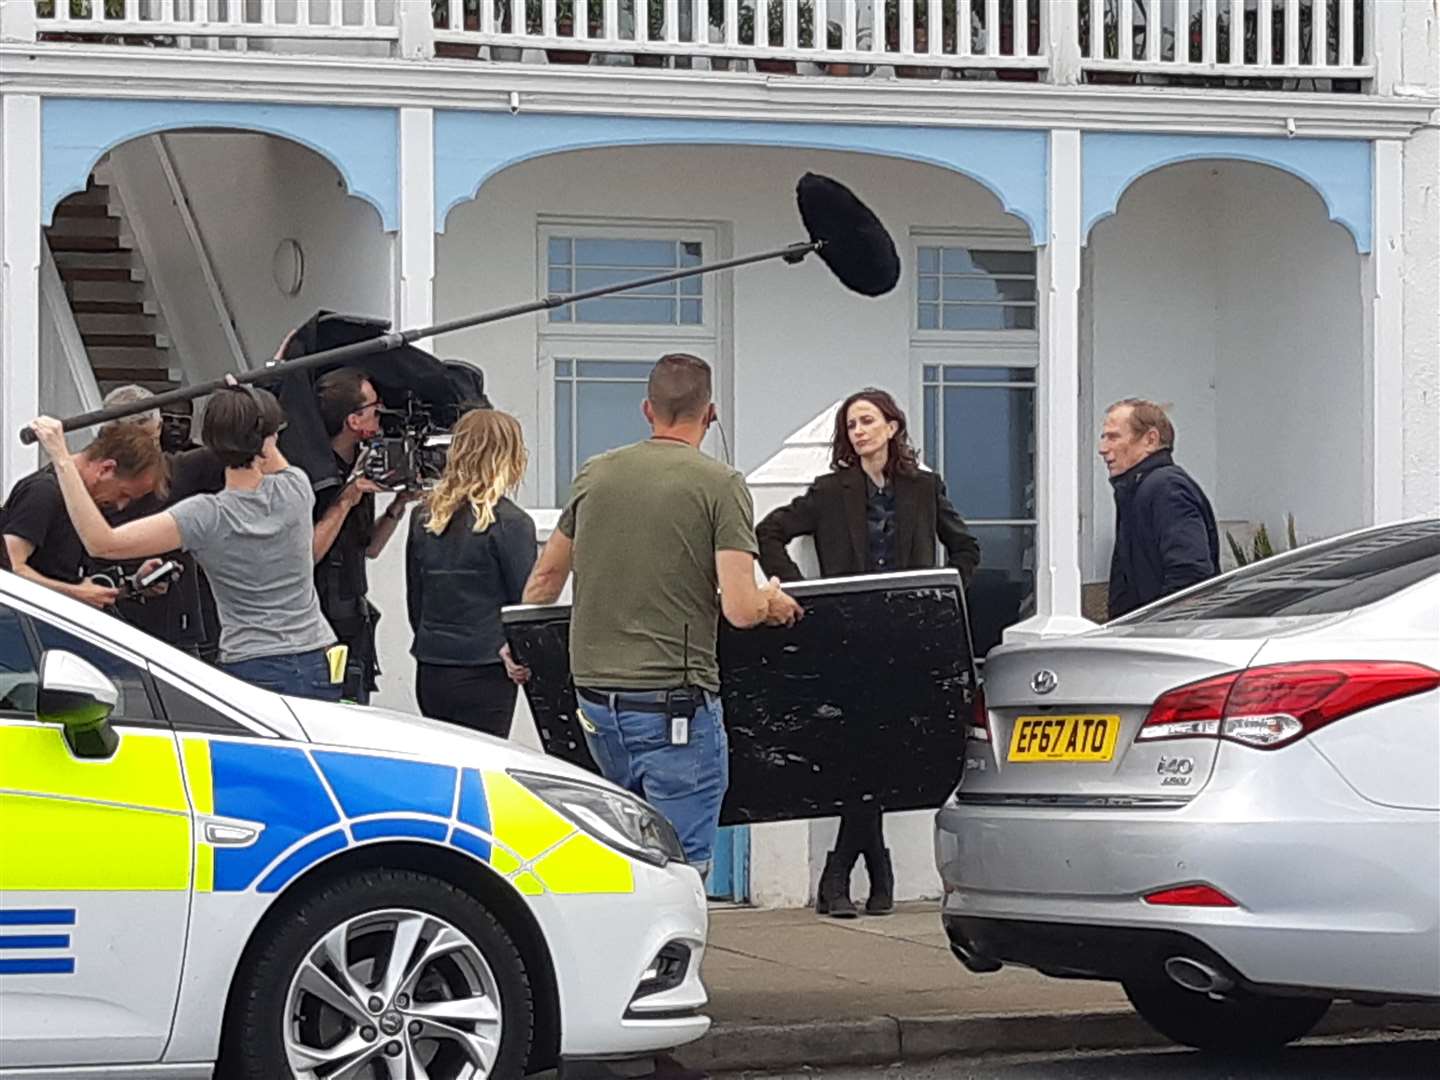 Joanne Froggatt and Katherine Kelly were spotted filming for Liar 2 in Deal in June 2019